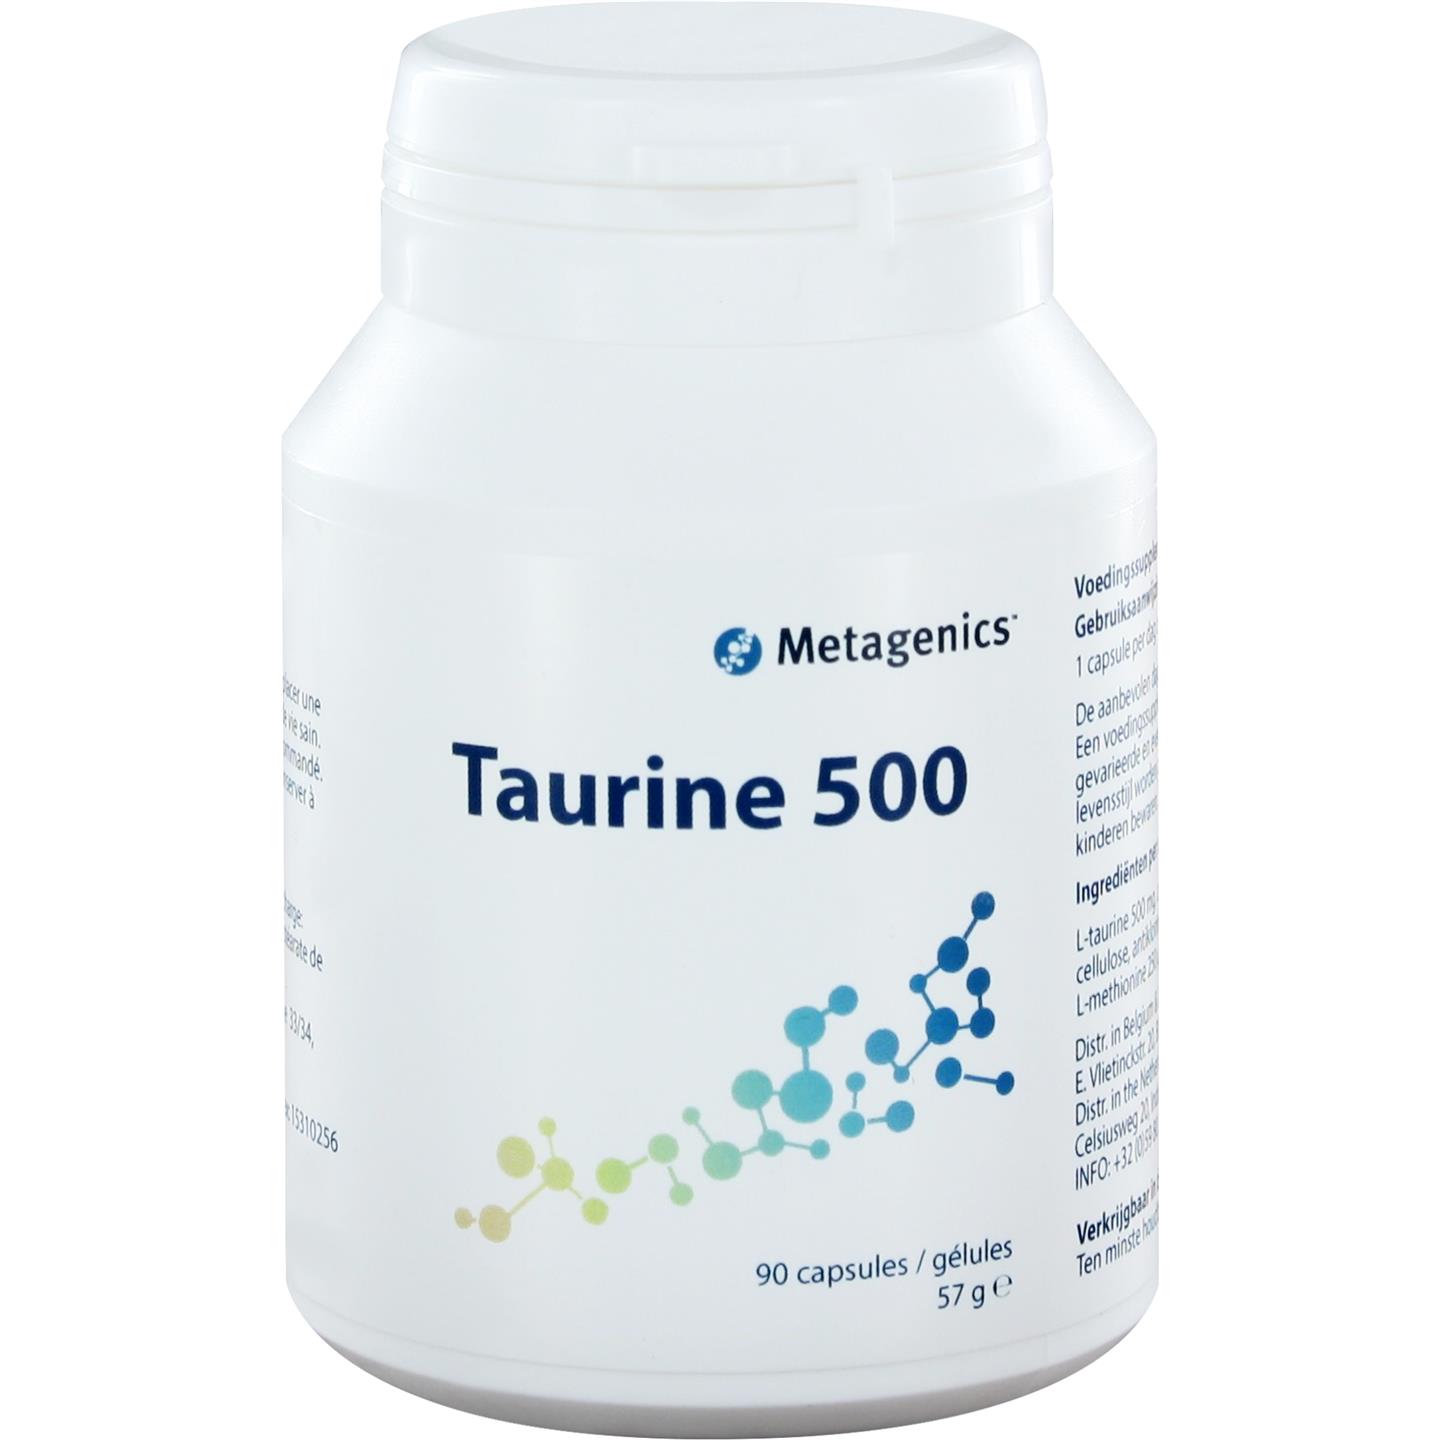 Metagenics Taurine 500